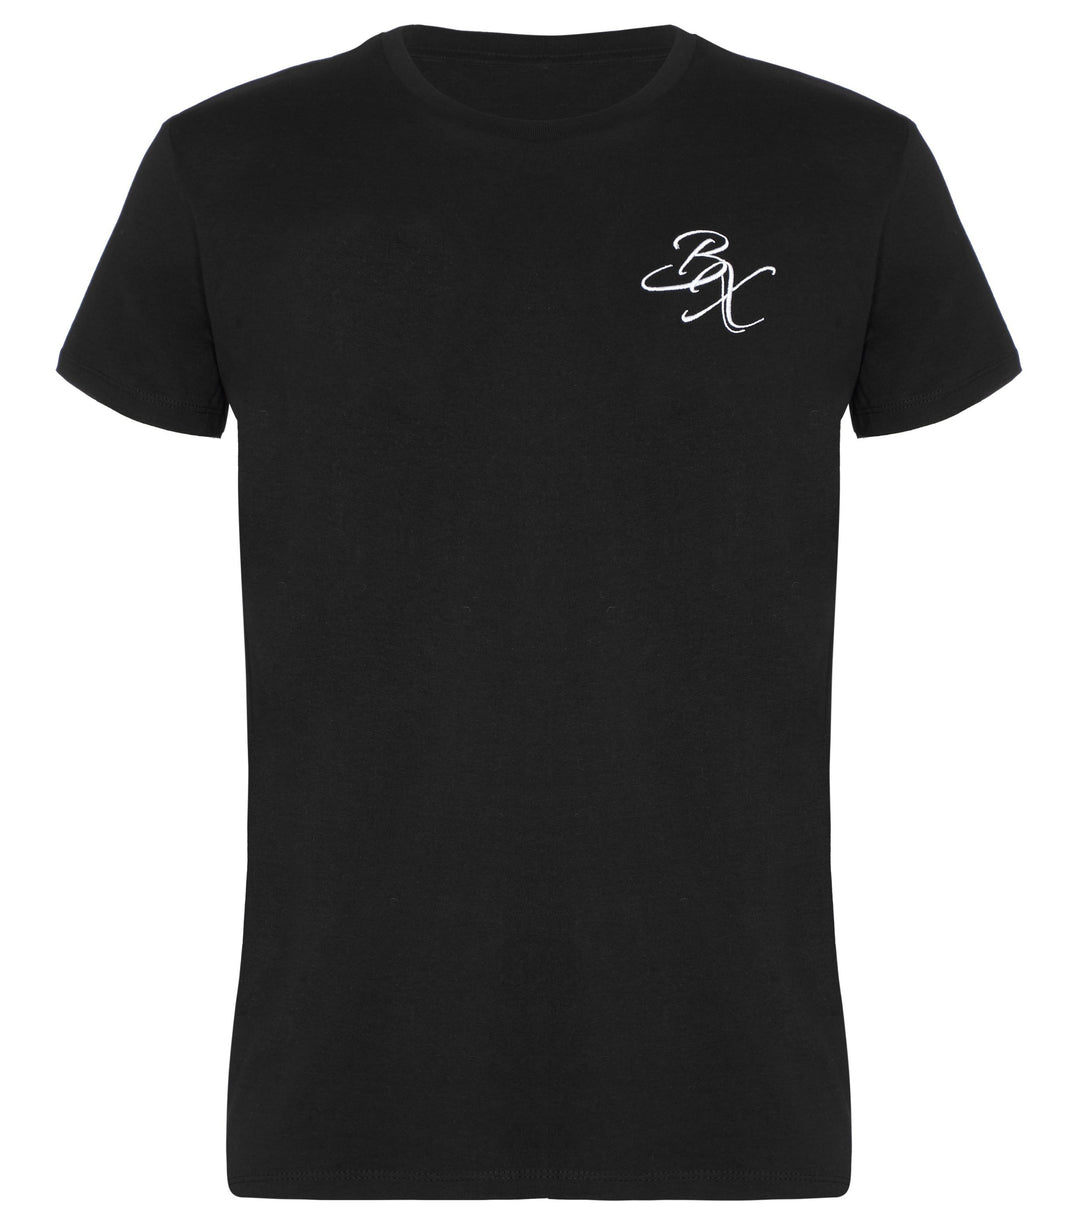 BX Original Slim Fit T-shirt - Black - Adapt Avenue